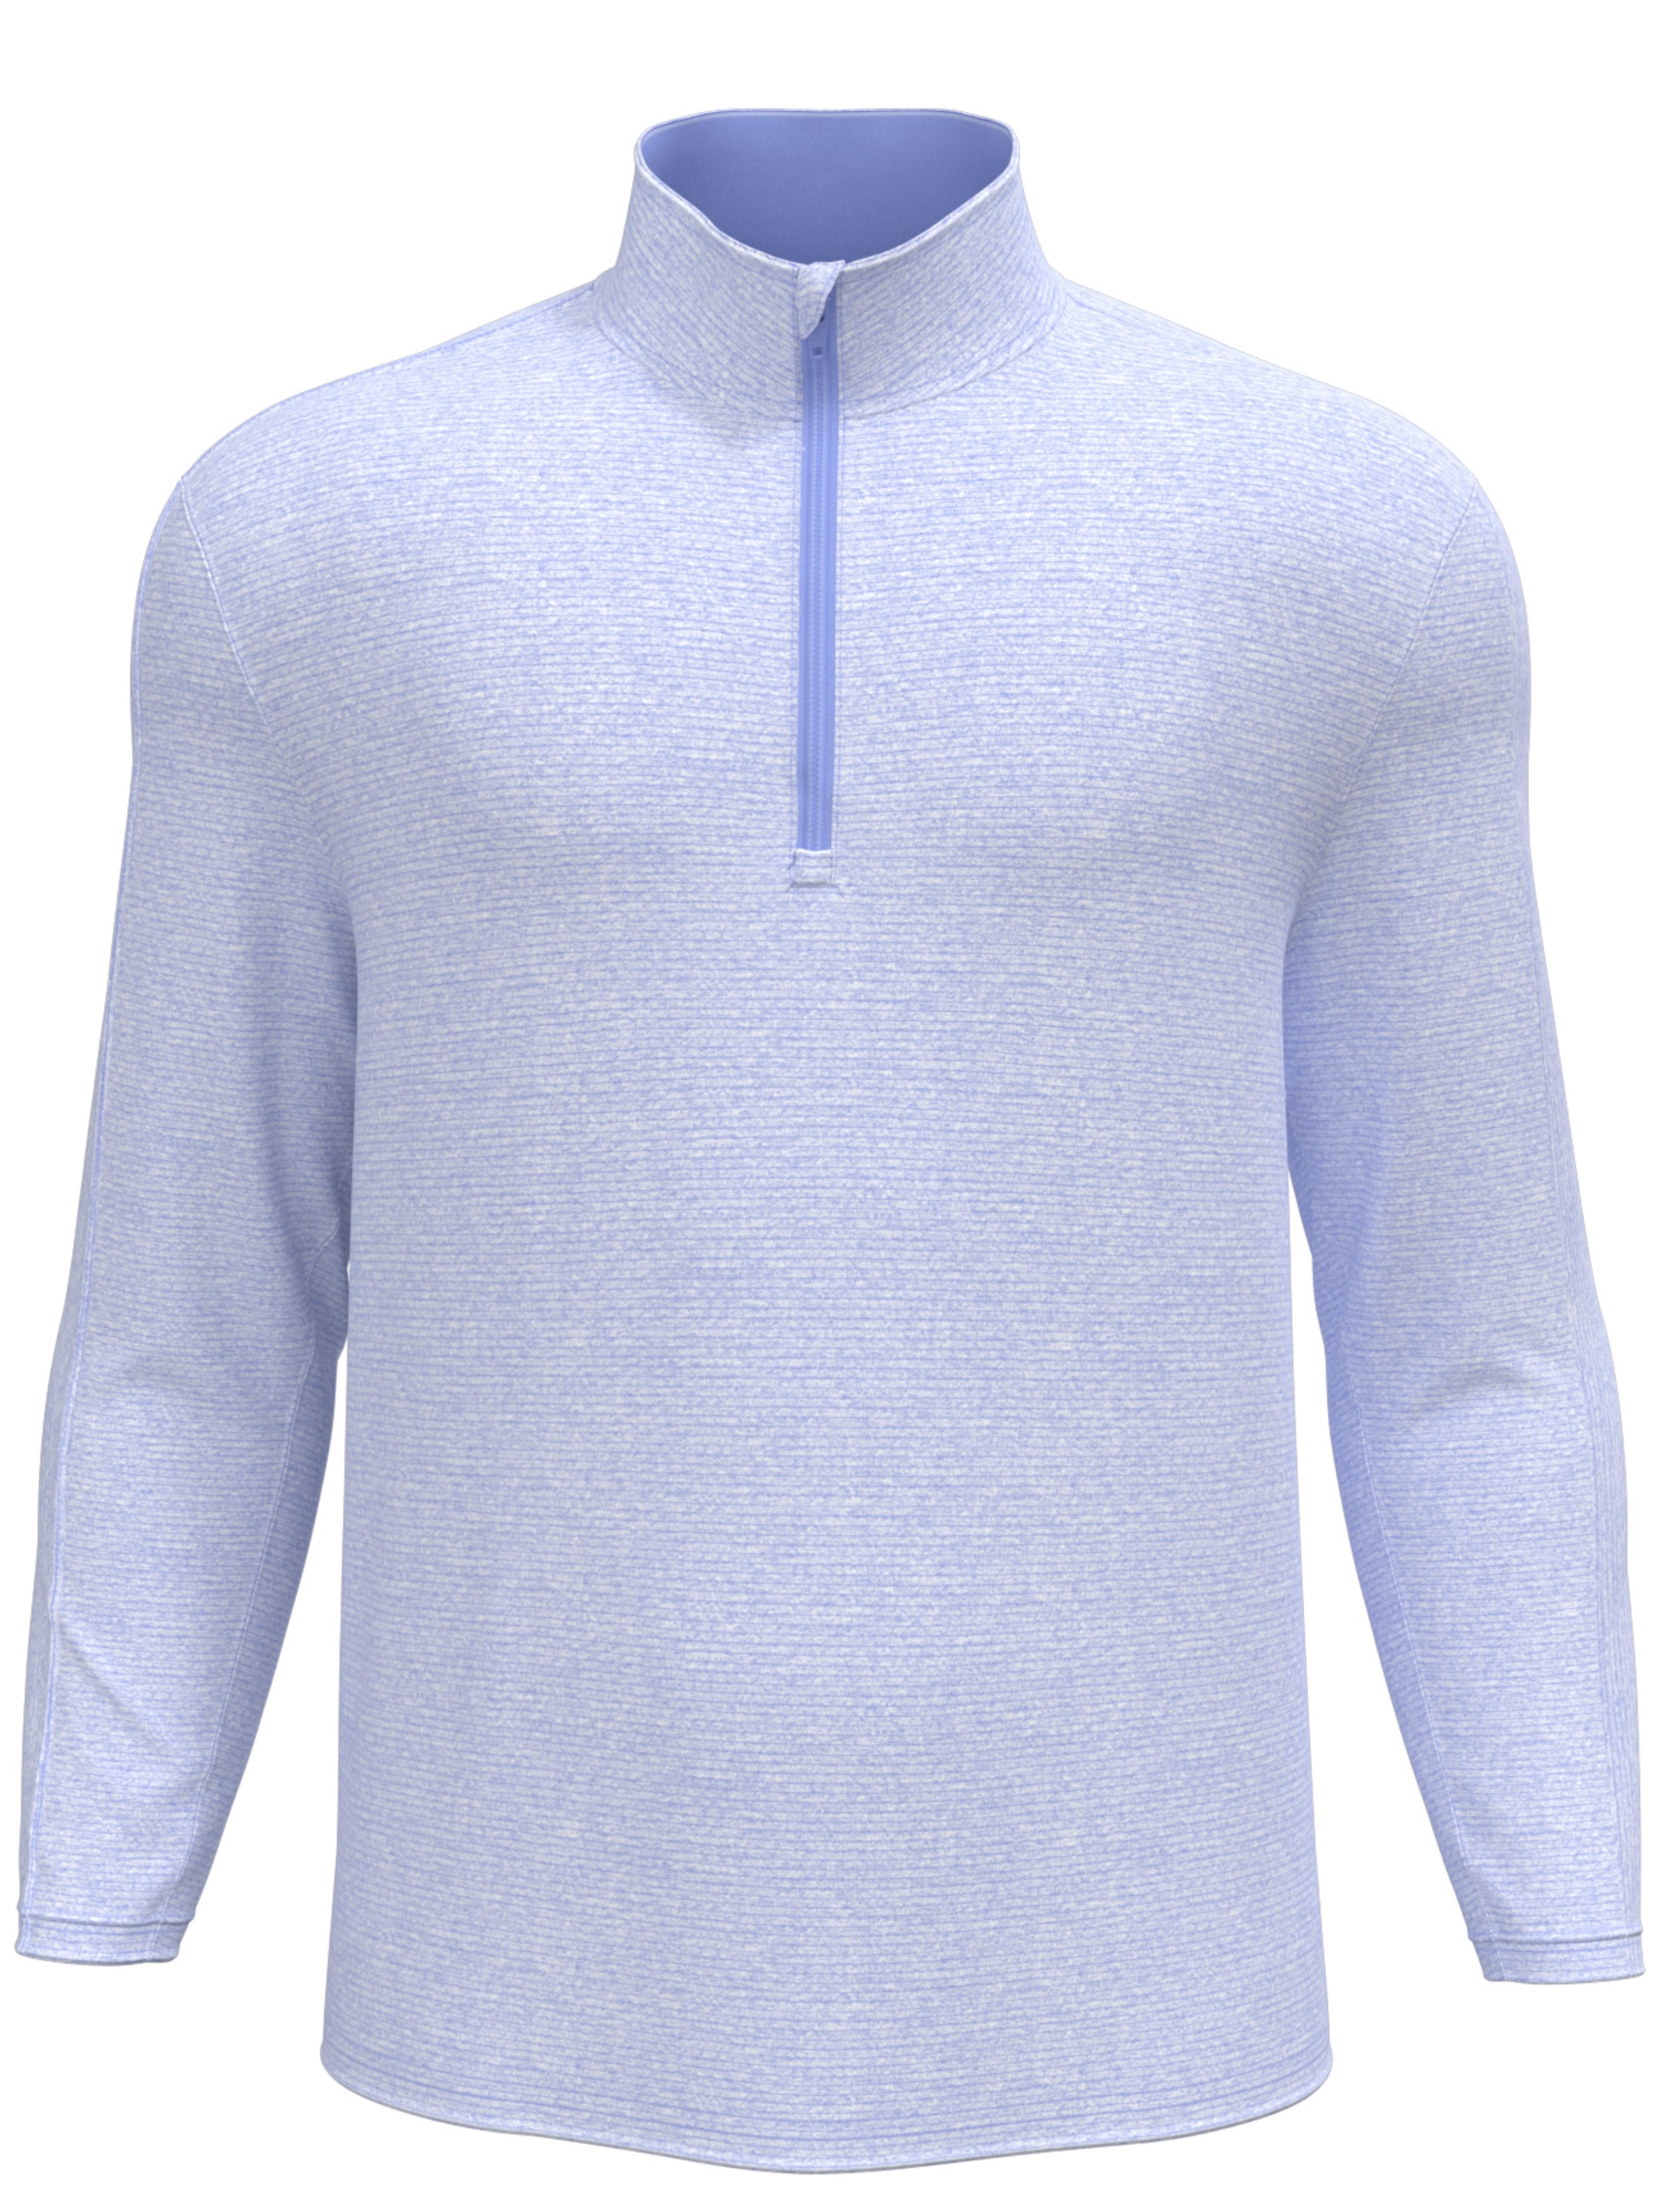 Jack Nicklaus Mens 1/4 Zip Sun Shade Base Layer Golf Shirt, Size 2XL, Light Coastline Bl Heather Blue, Polyester/Elastane | Golf Apparel Shop